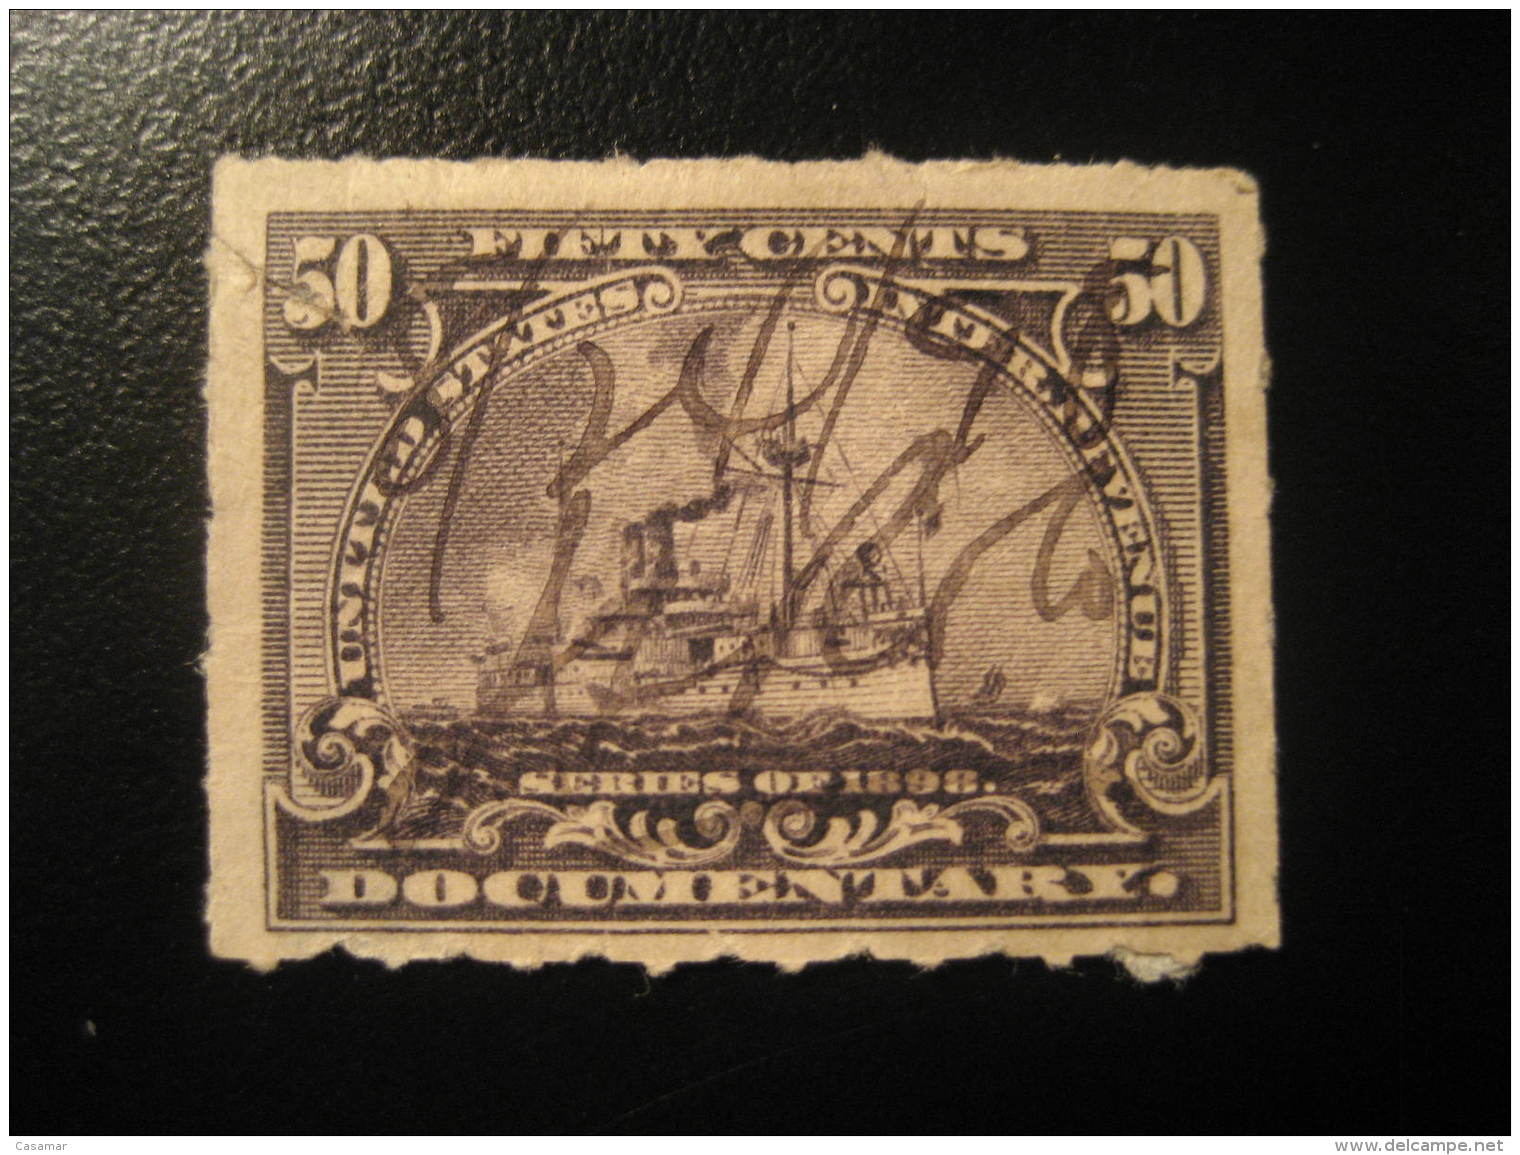 1898 DOCUMENTARY 50 Cent Battleship Battleships Ship Militar Revenue Fiscal Tax Postage Due Official USA - Steuermarken